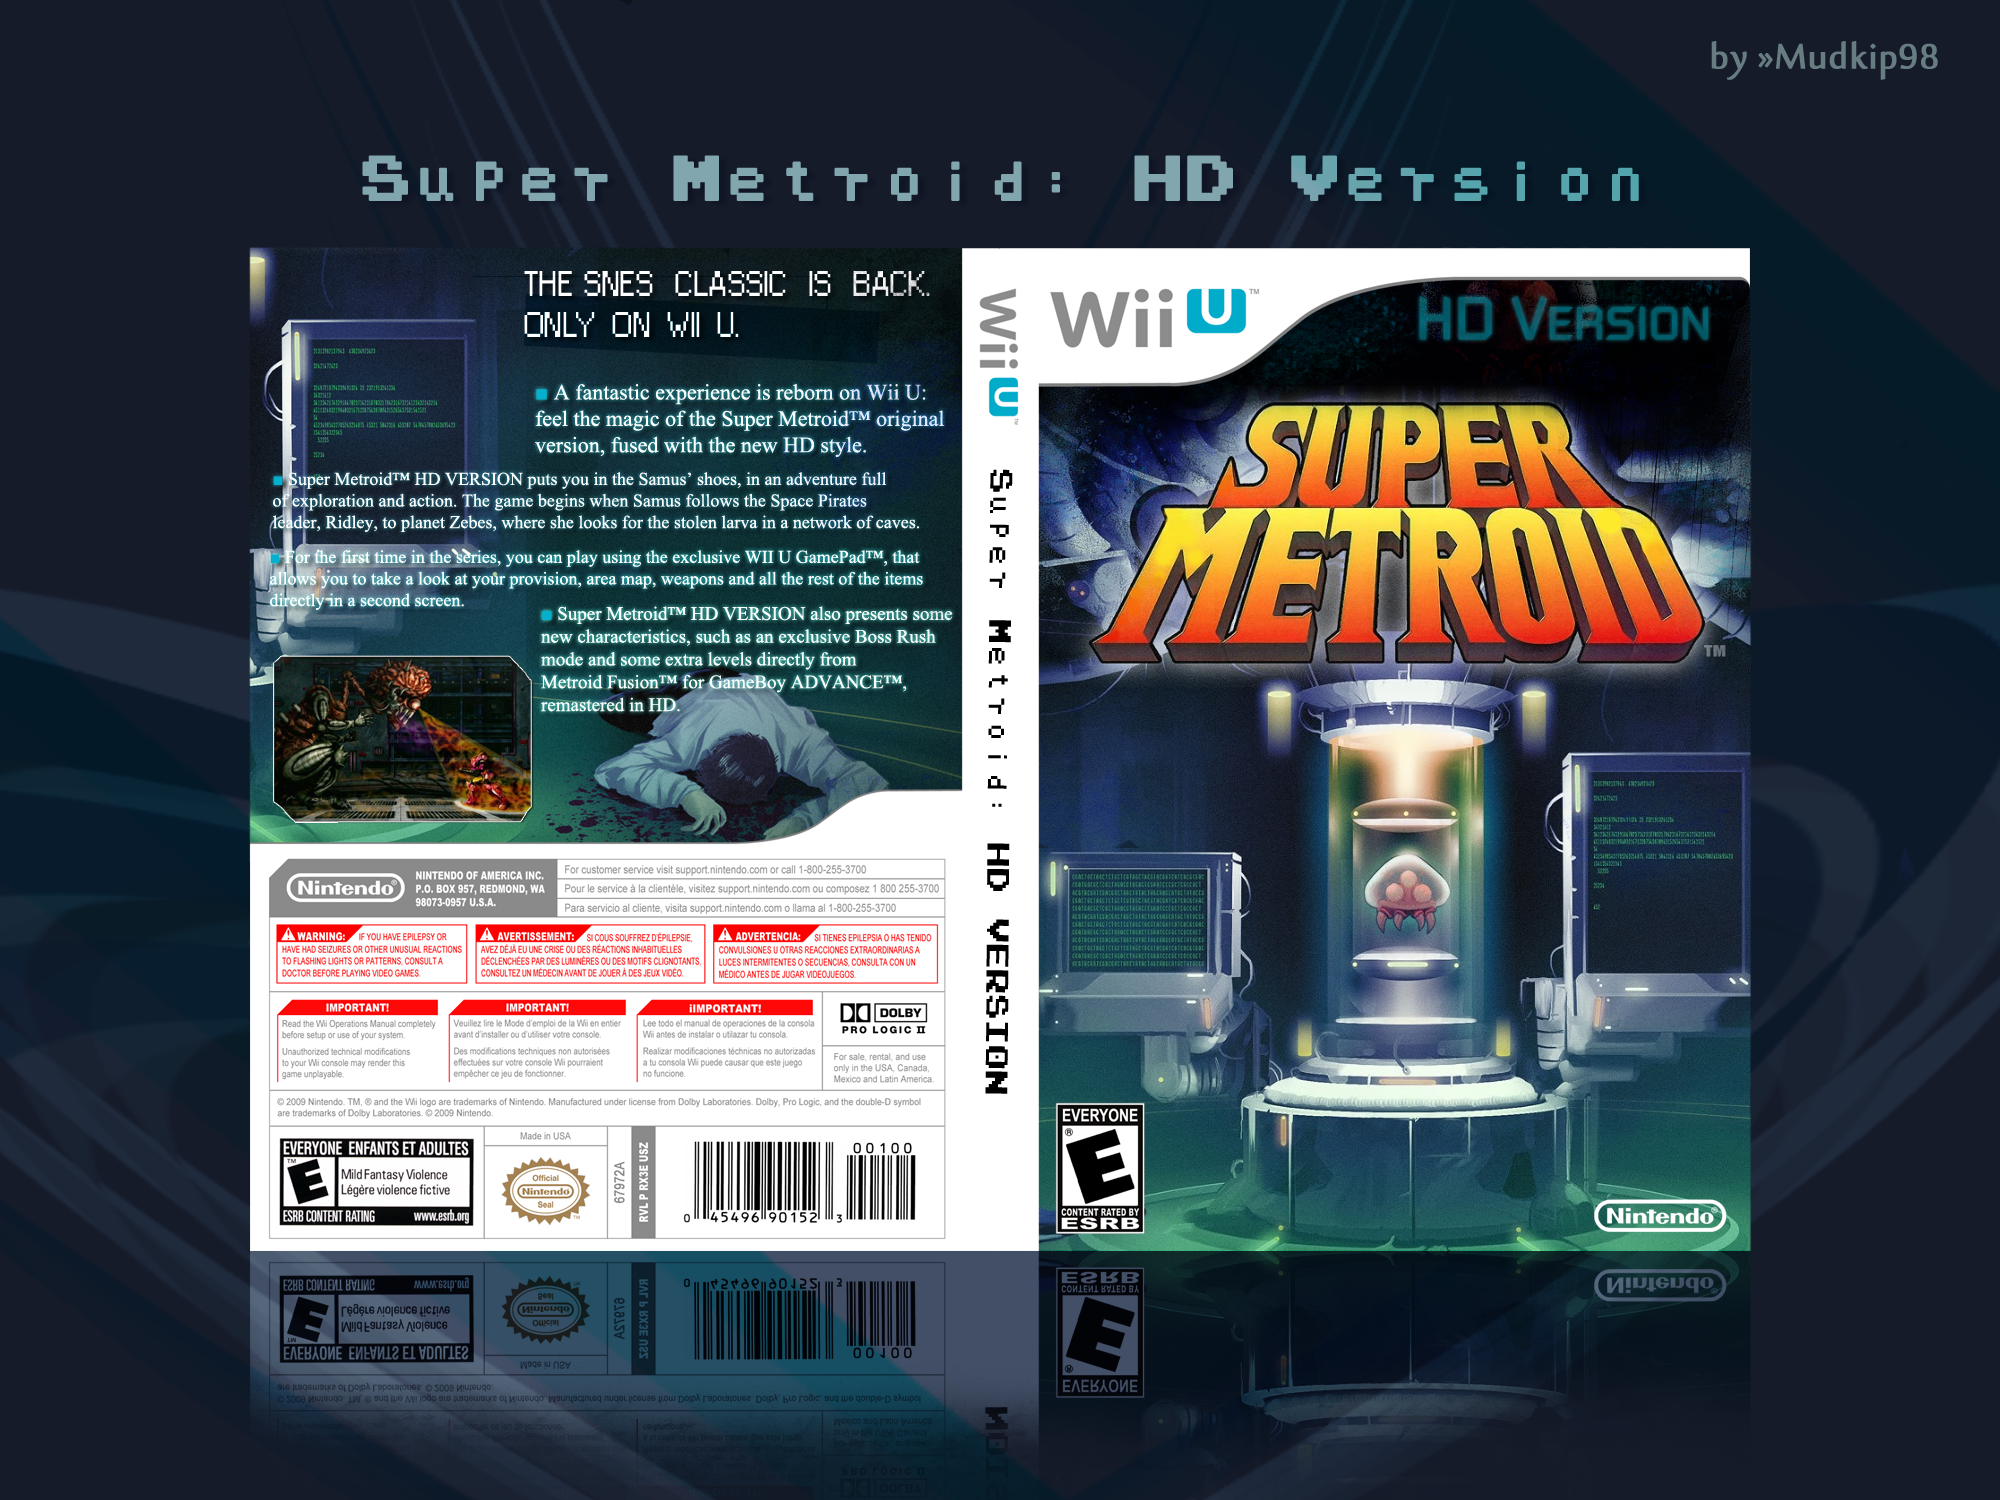 Super Metroid: HD Version box cover